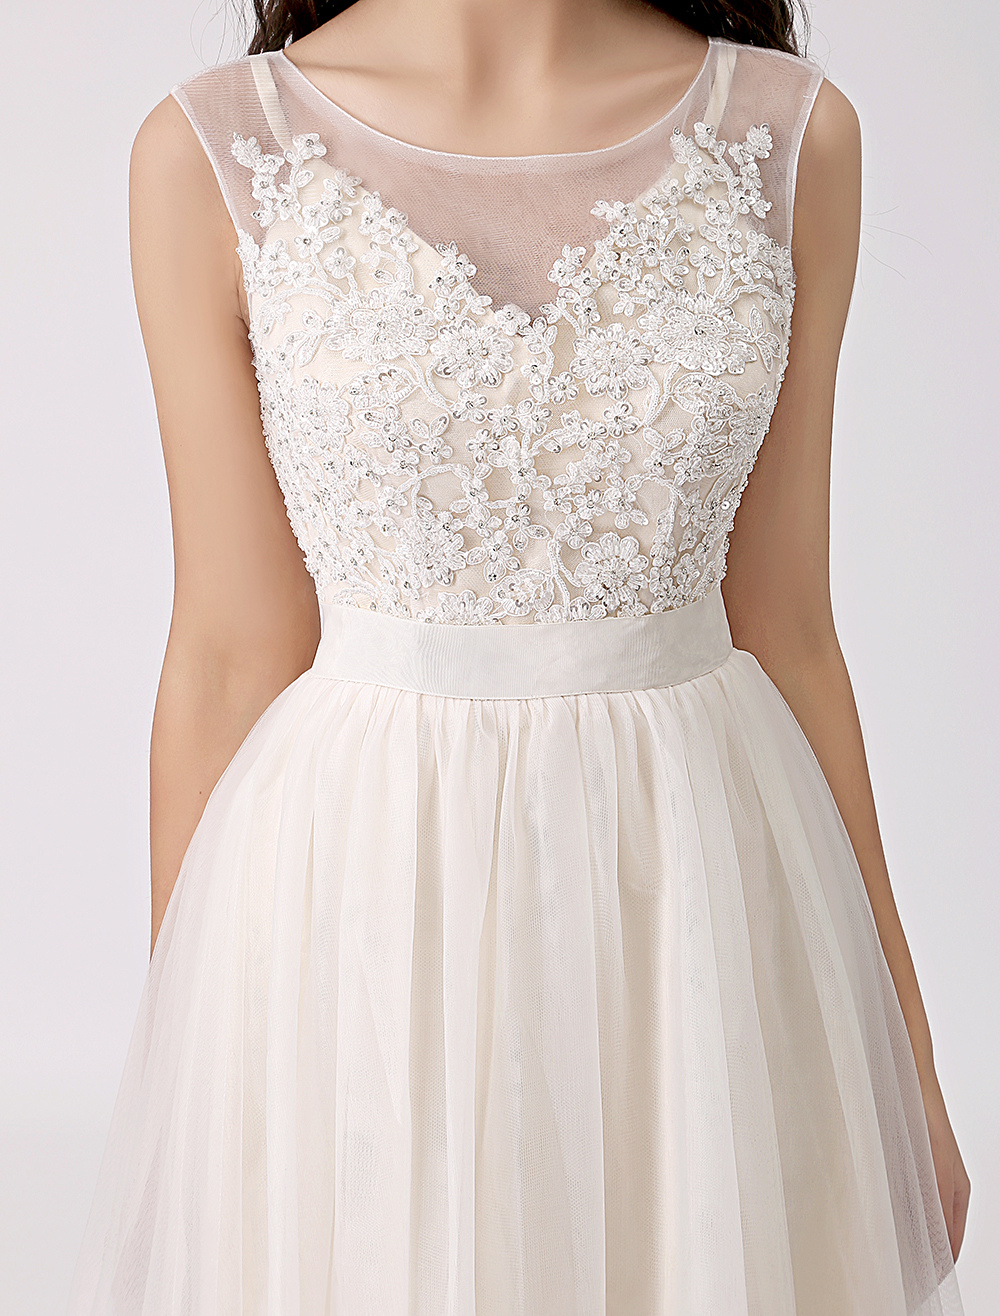 Ivory Beaded Lace Wedding Dress with Sheer Back - Milanoo.com